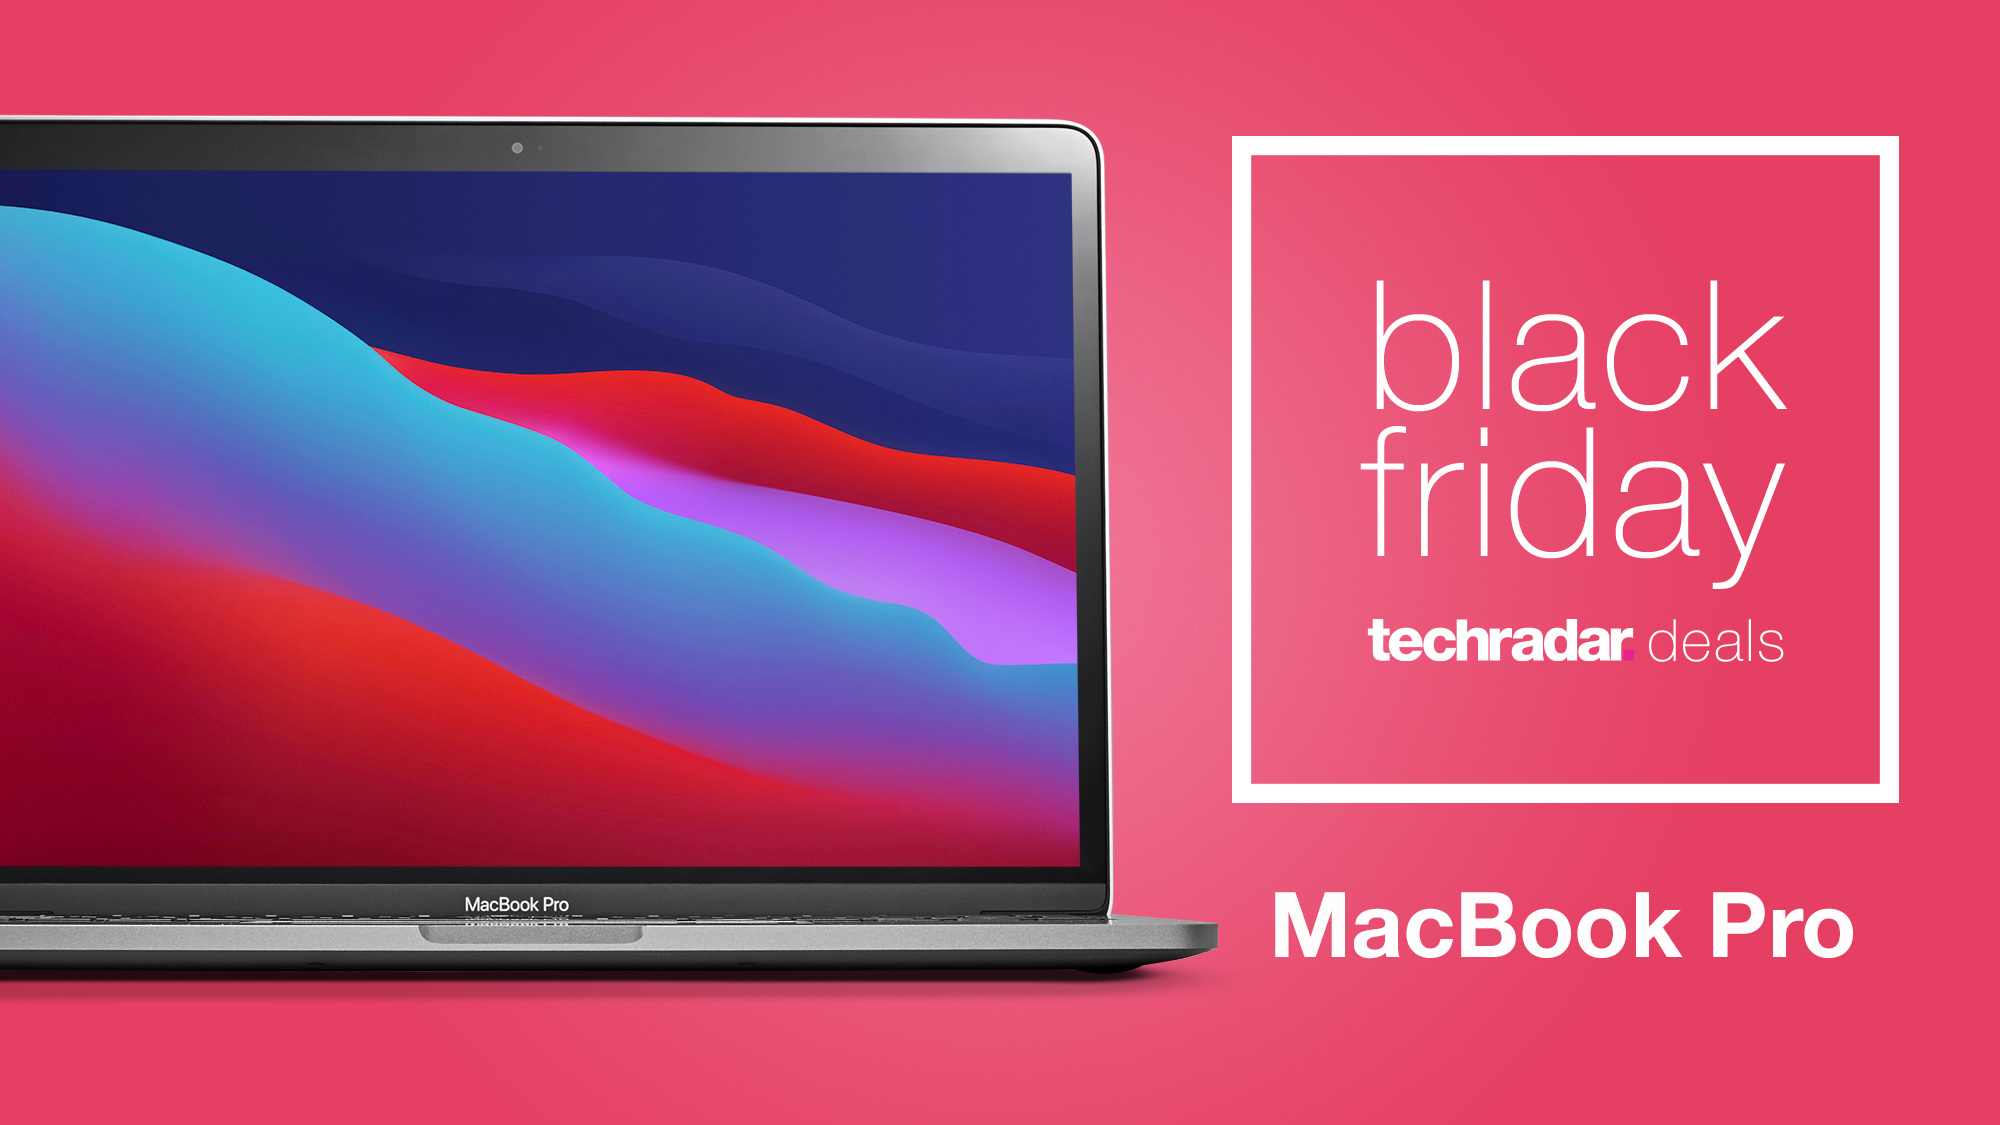 Apple macbook on sale black friday lenovo thinkpad x200t price